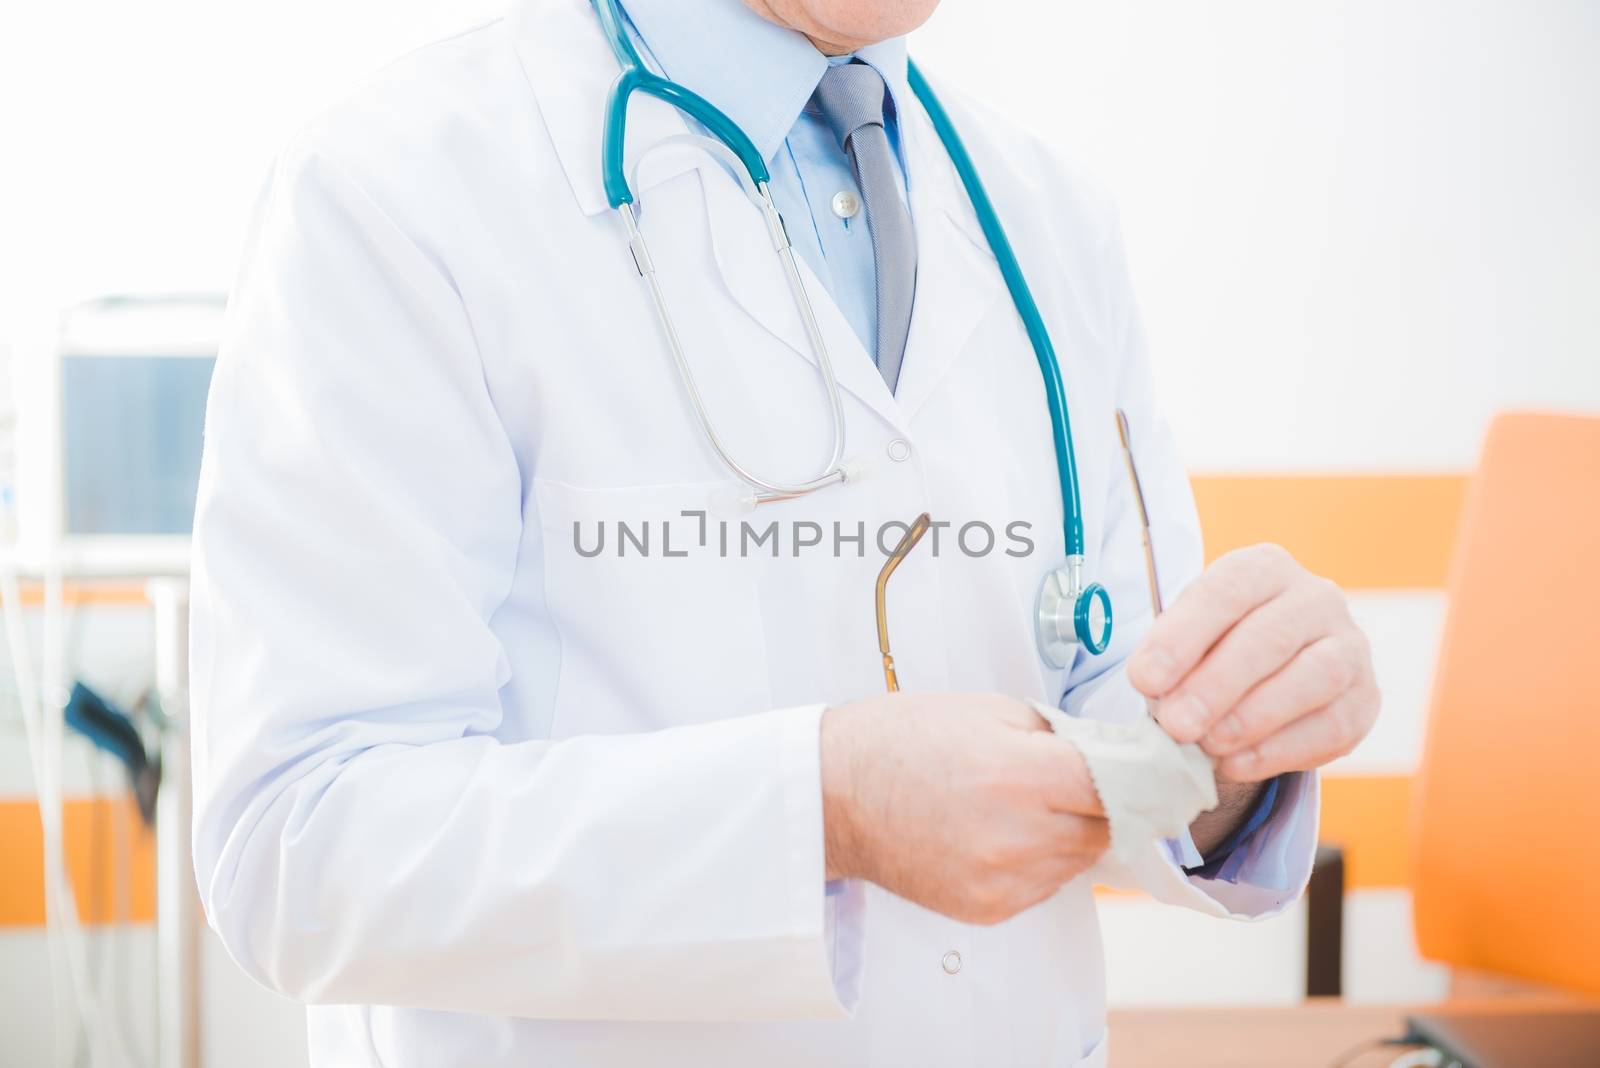 Doctor Uniform Closeup by welcomia